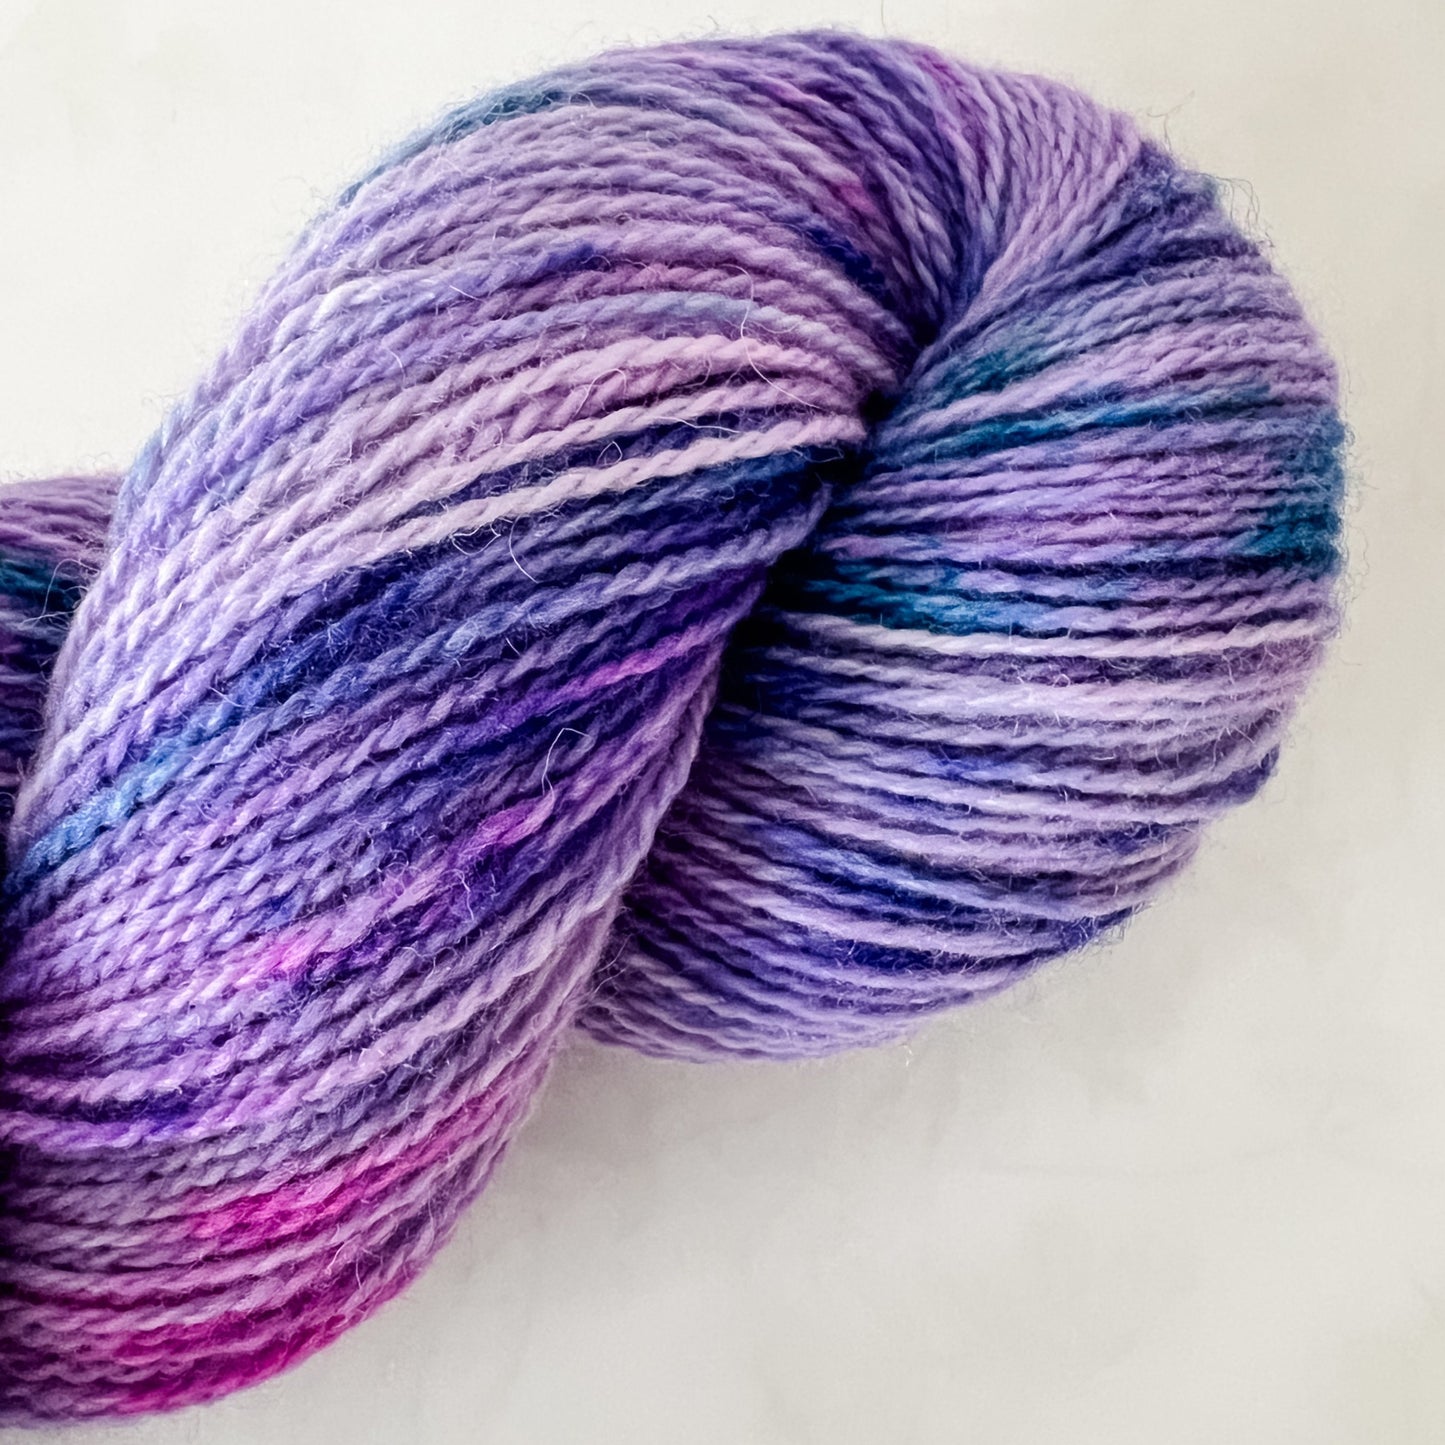 Purple Rain - Trollfjord sock - Hand Dyed Yarn - Variegated Yarn